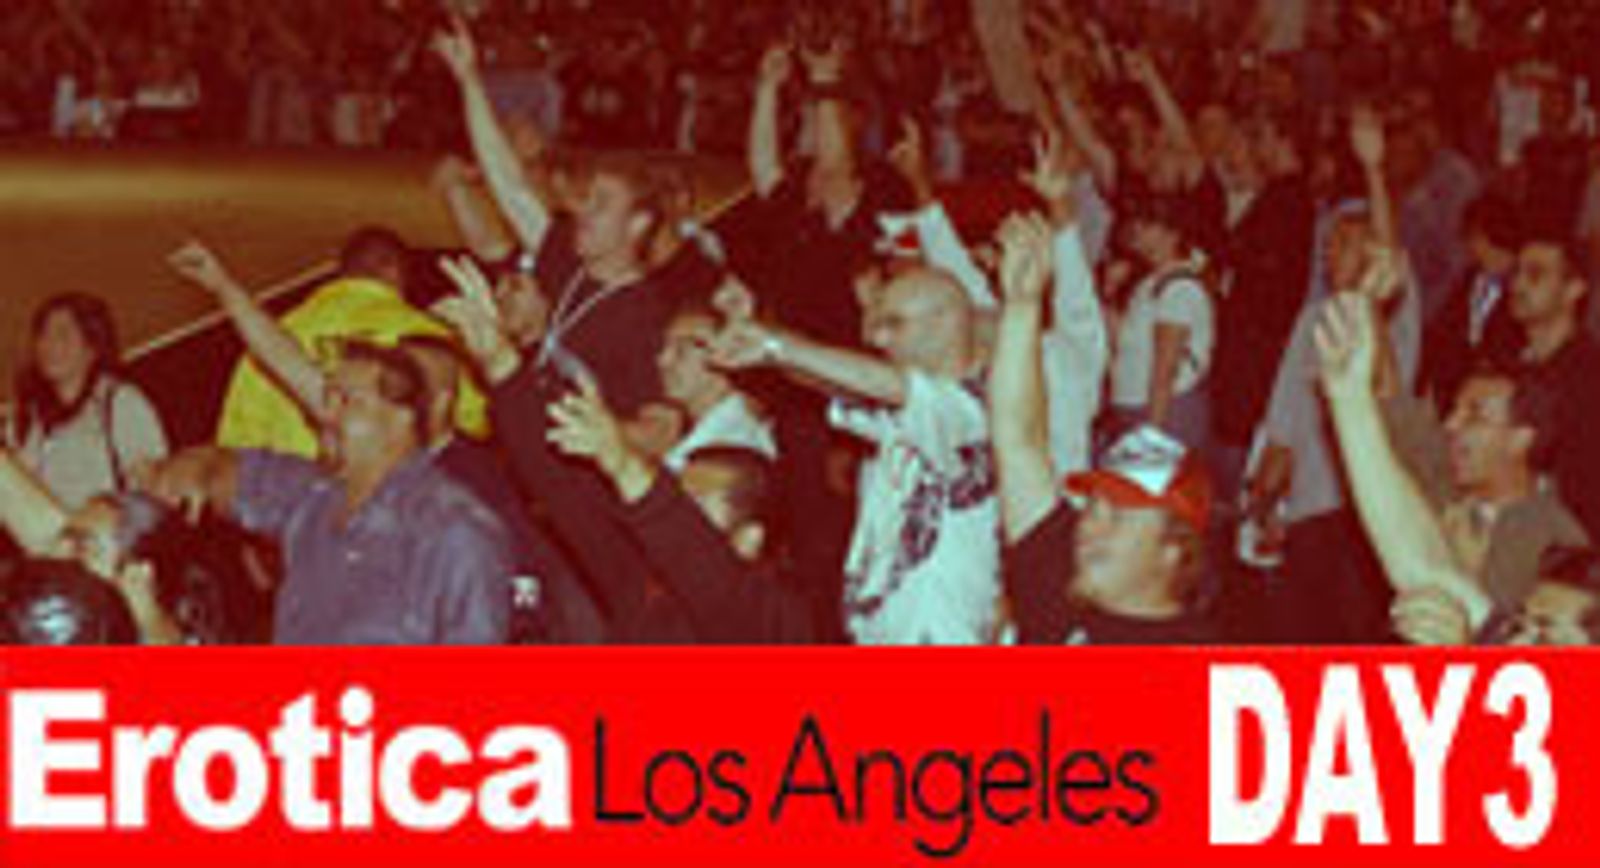 Erotica Los Angeles Sets Record-Breaking Attendance